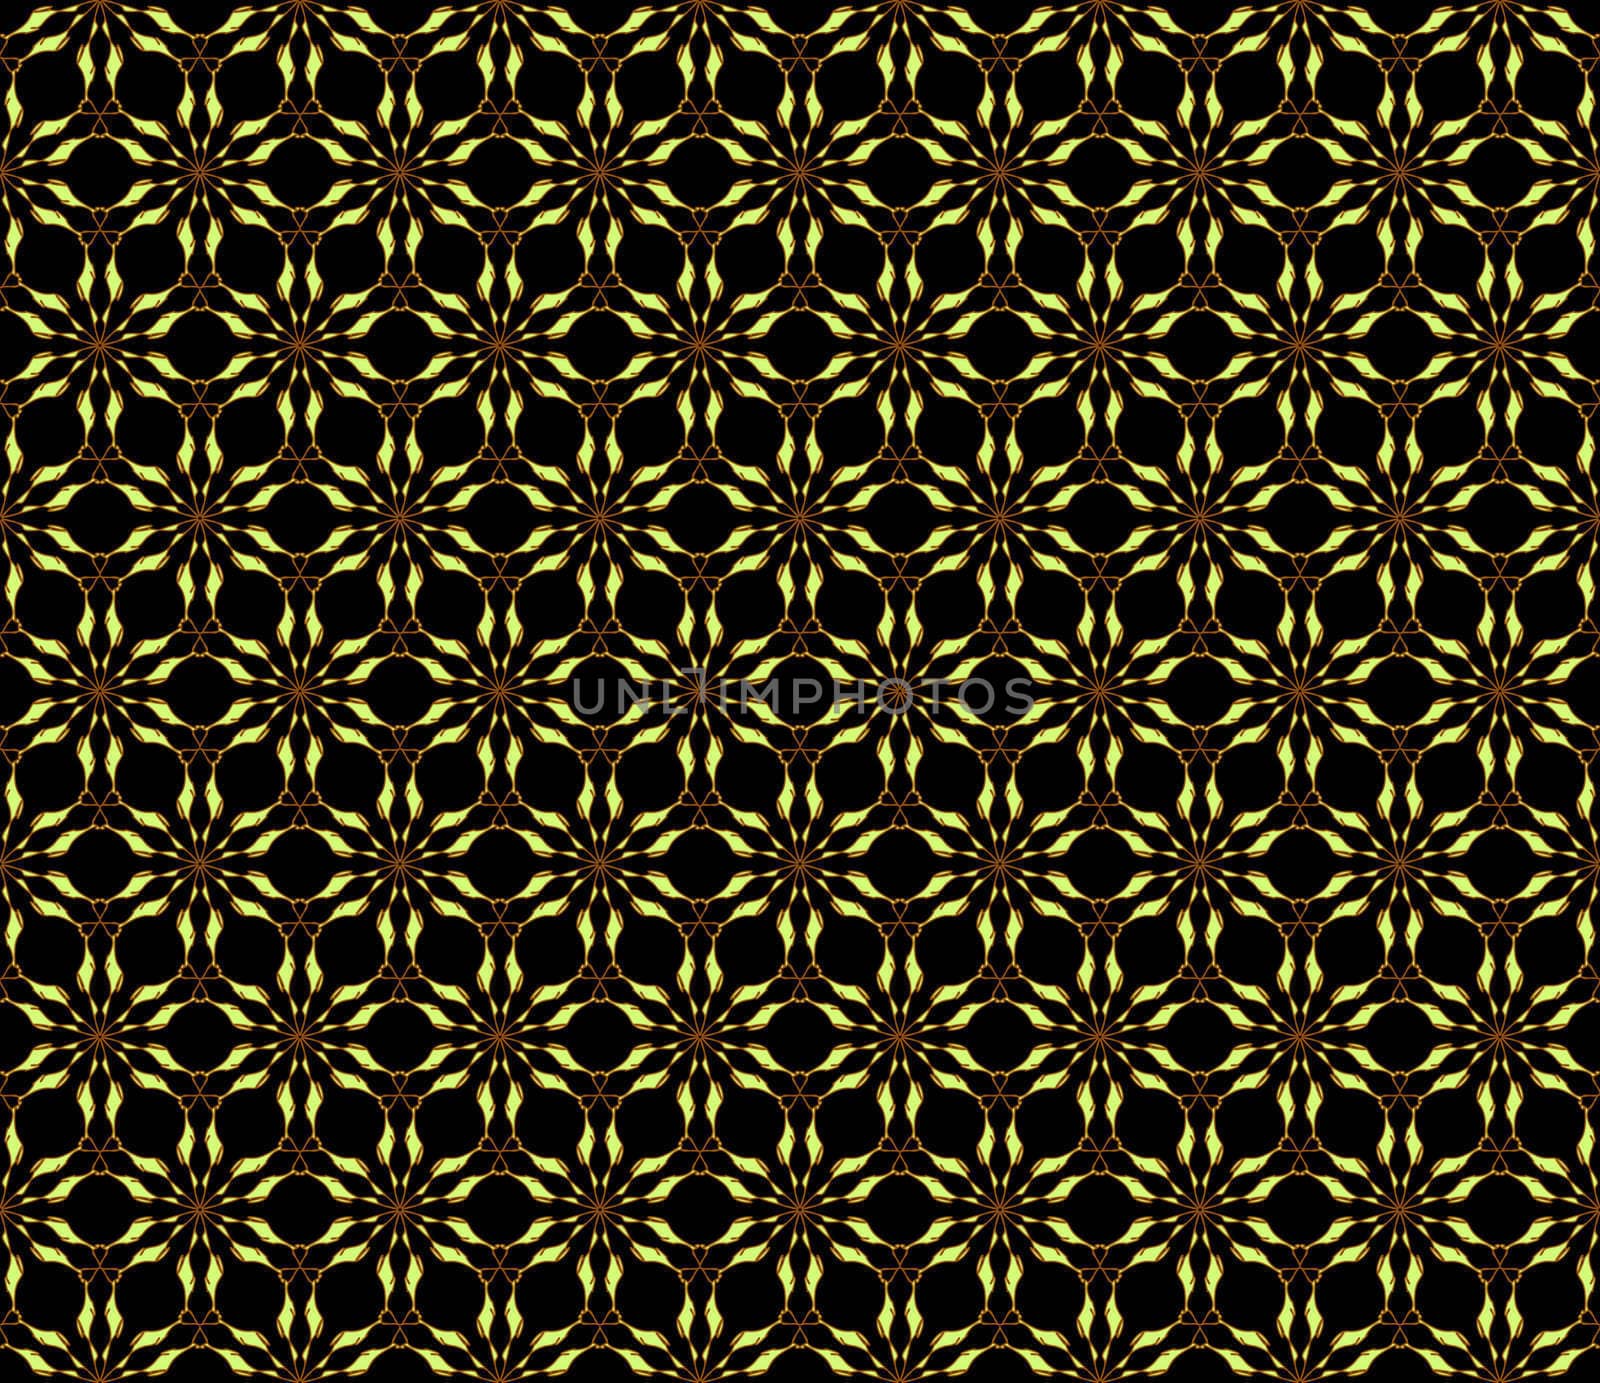 Wallpaper pattern on the dark background